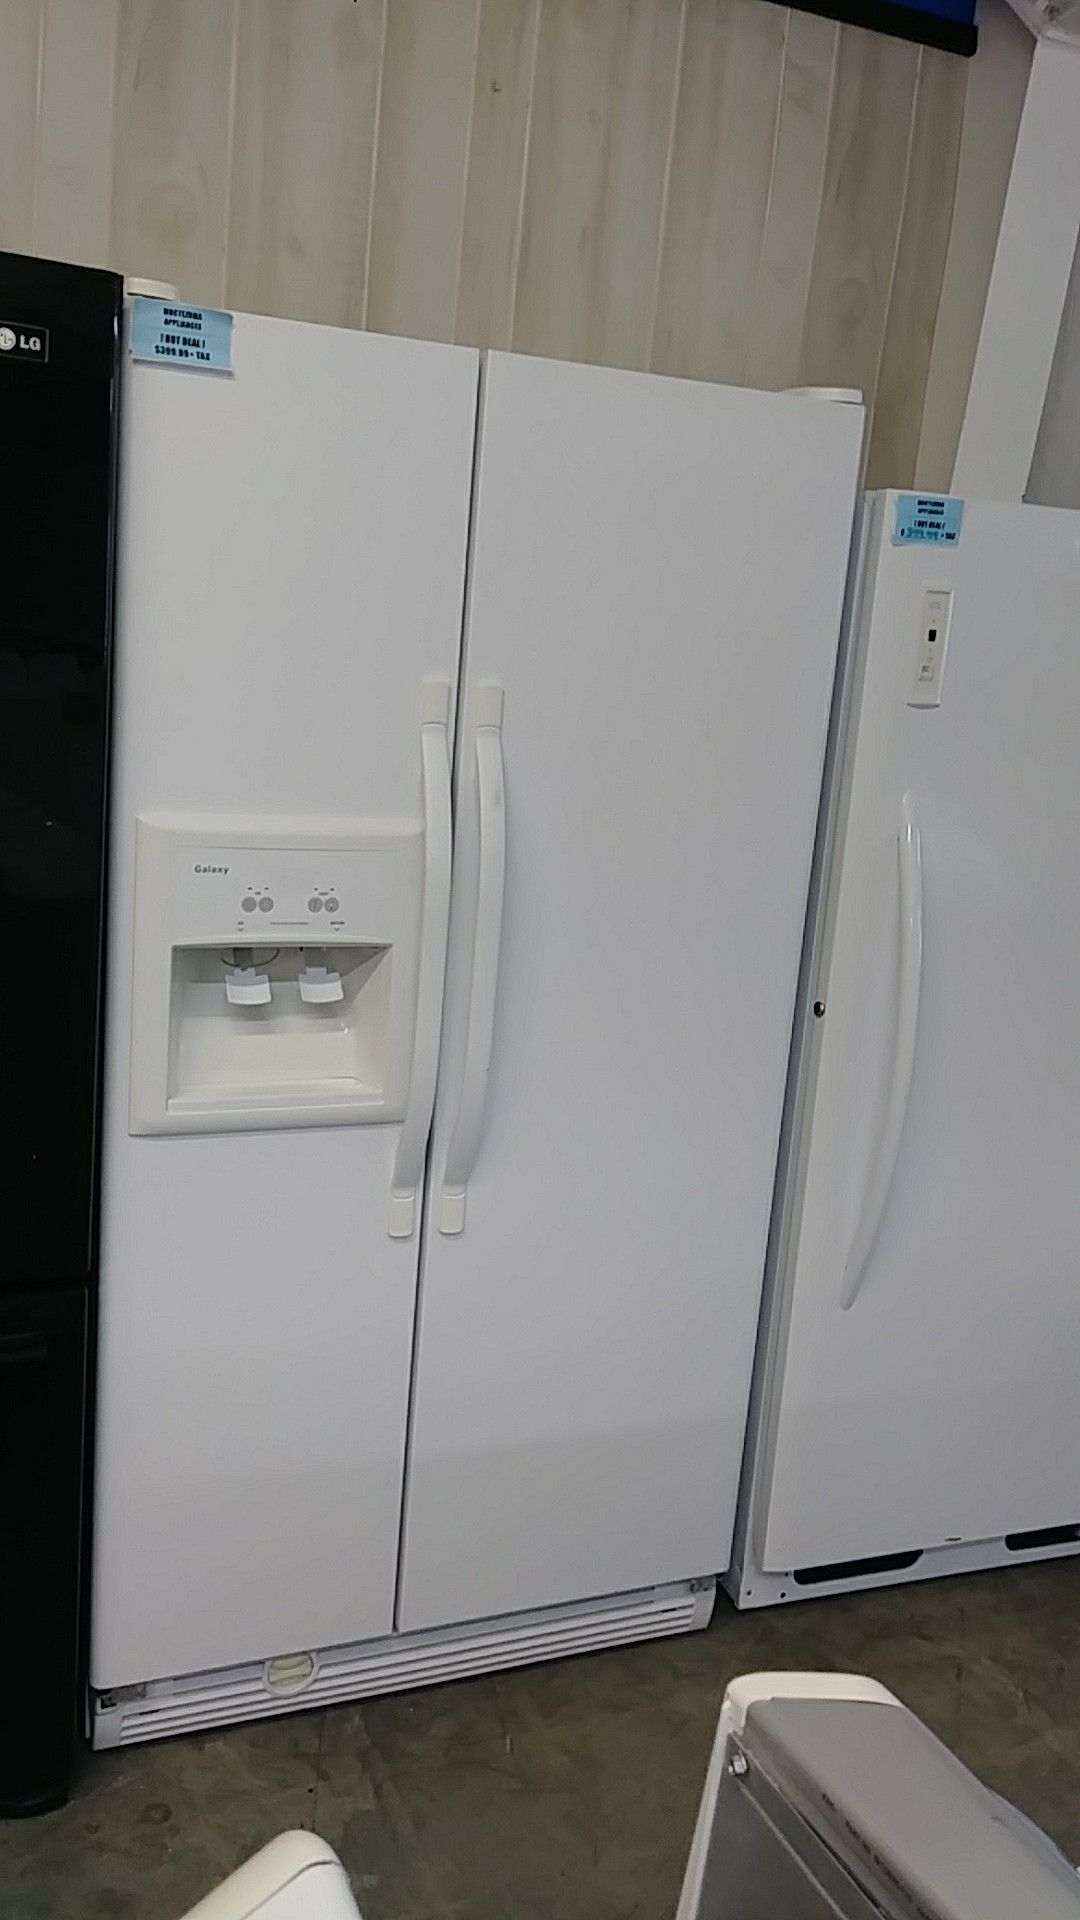 Galaxy white side by side refrigerator